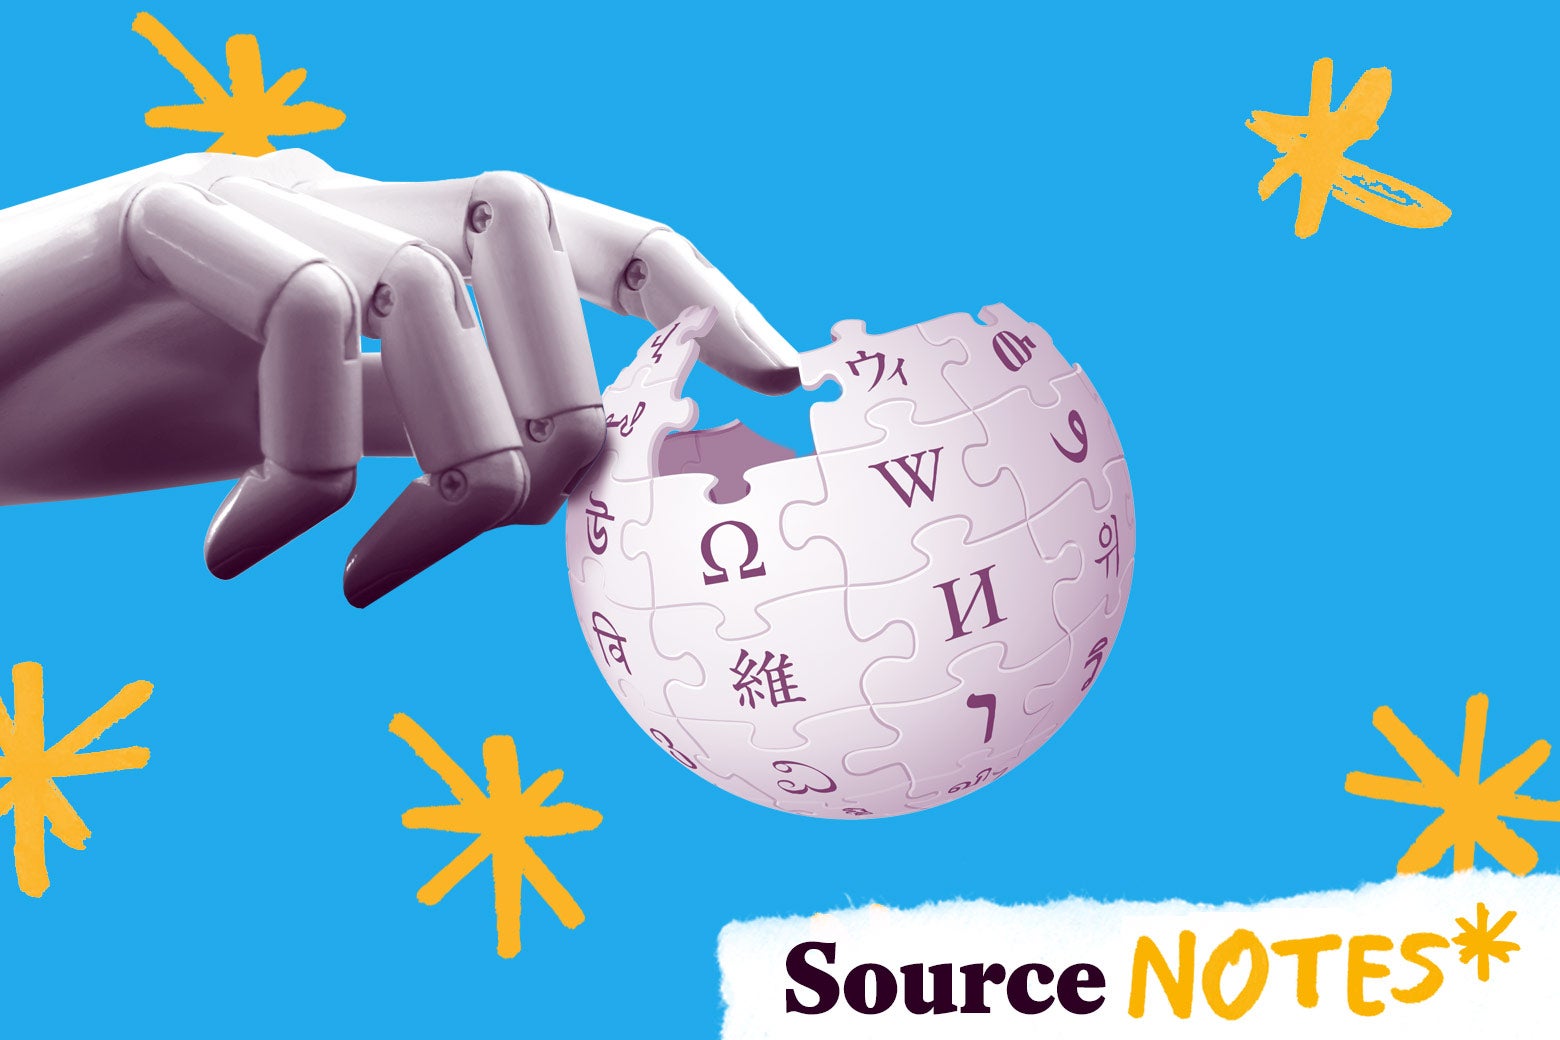 Robot hand touching the Wikipedia logo.